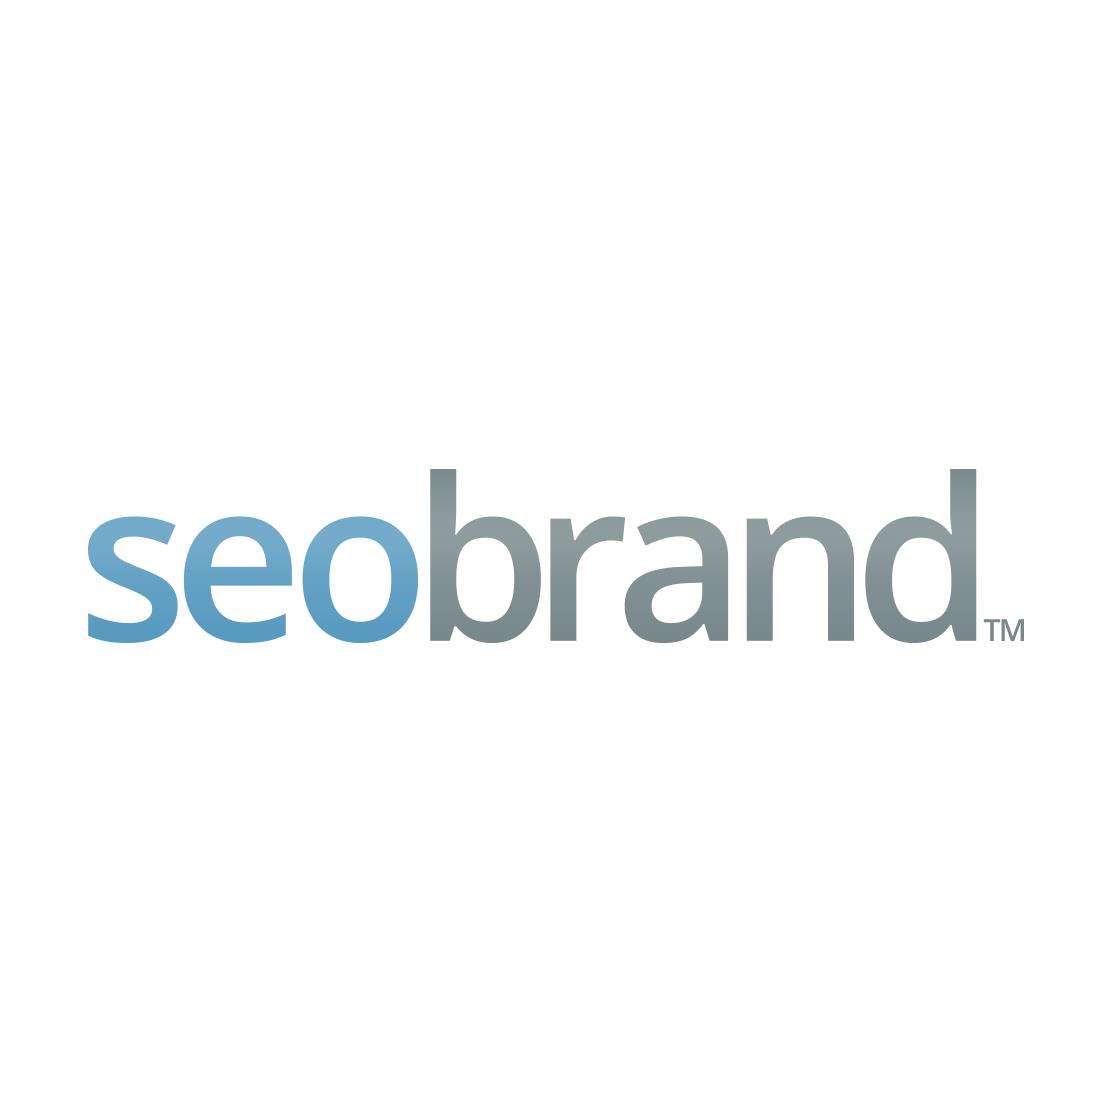 Top Boston SEO Company Logo: SEO Brand